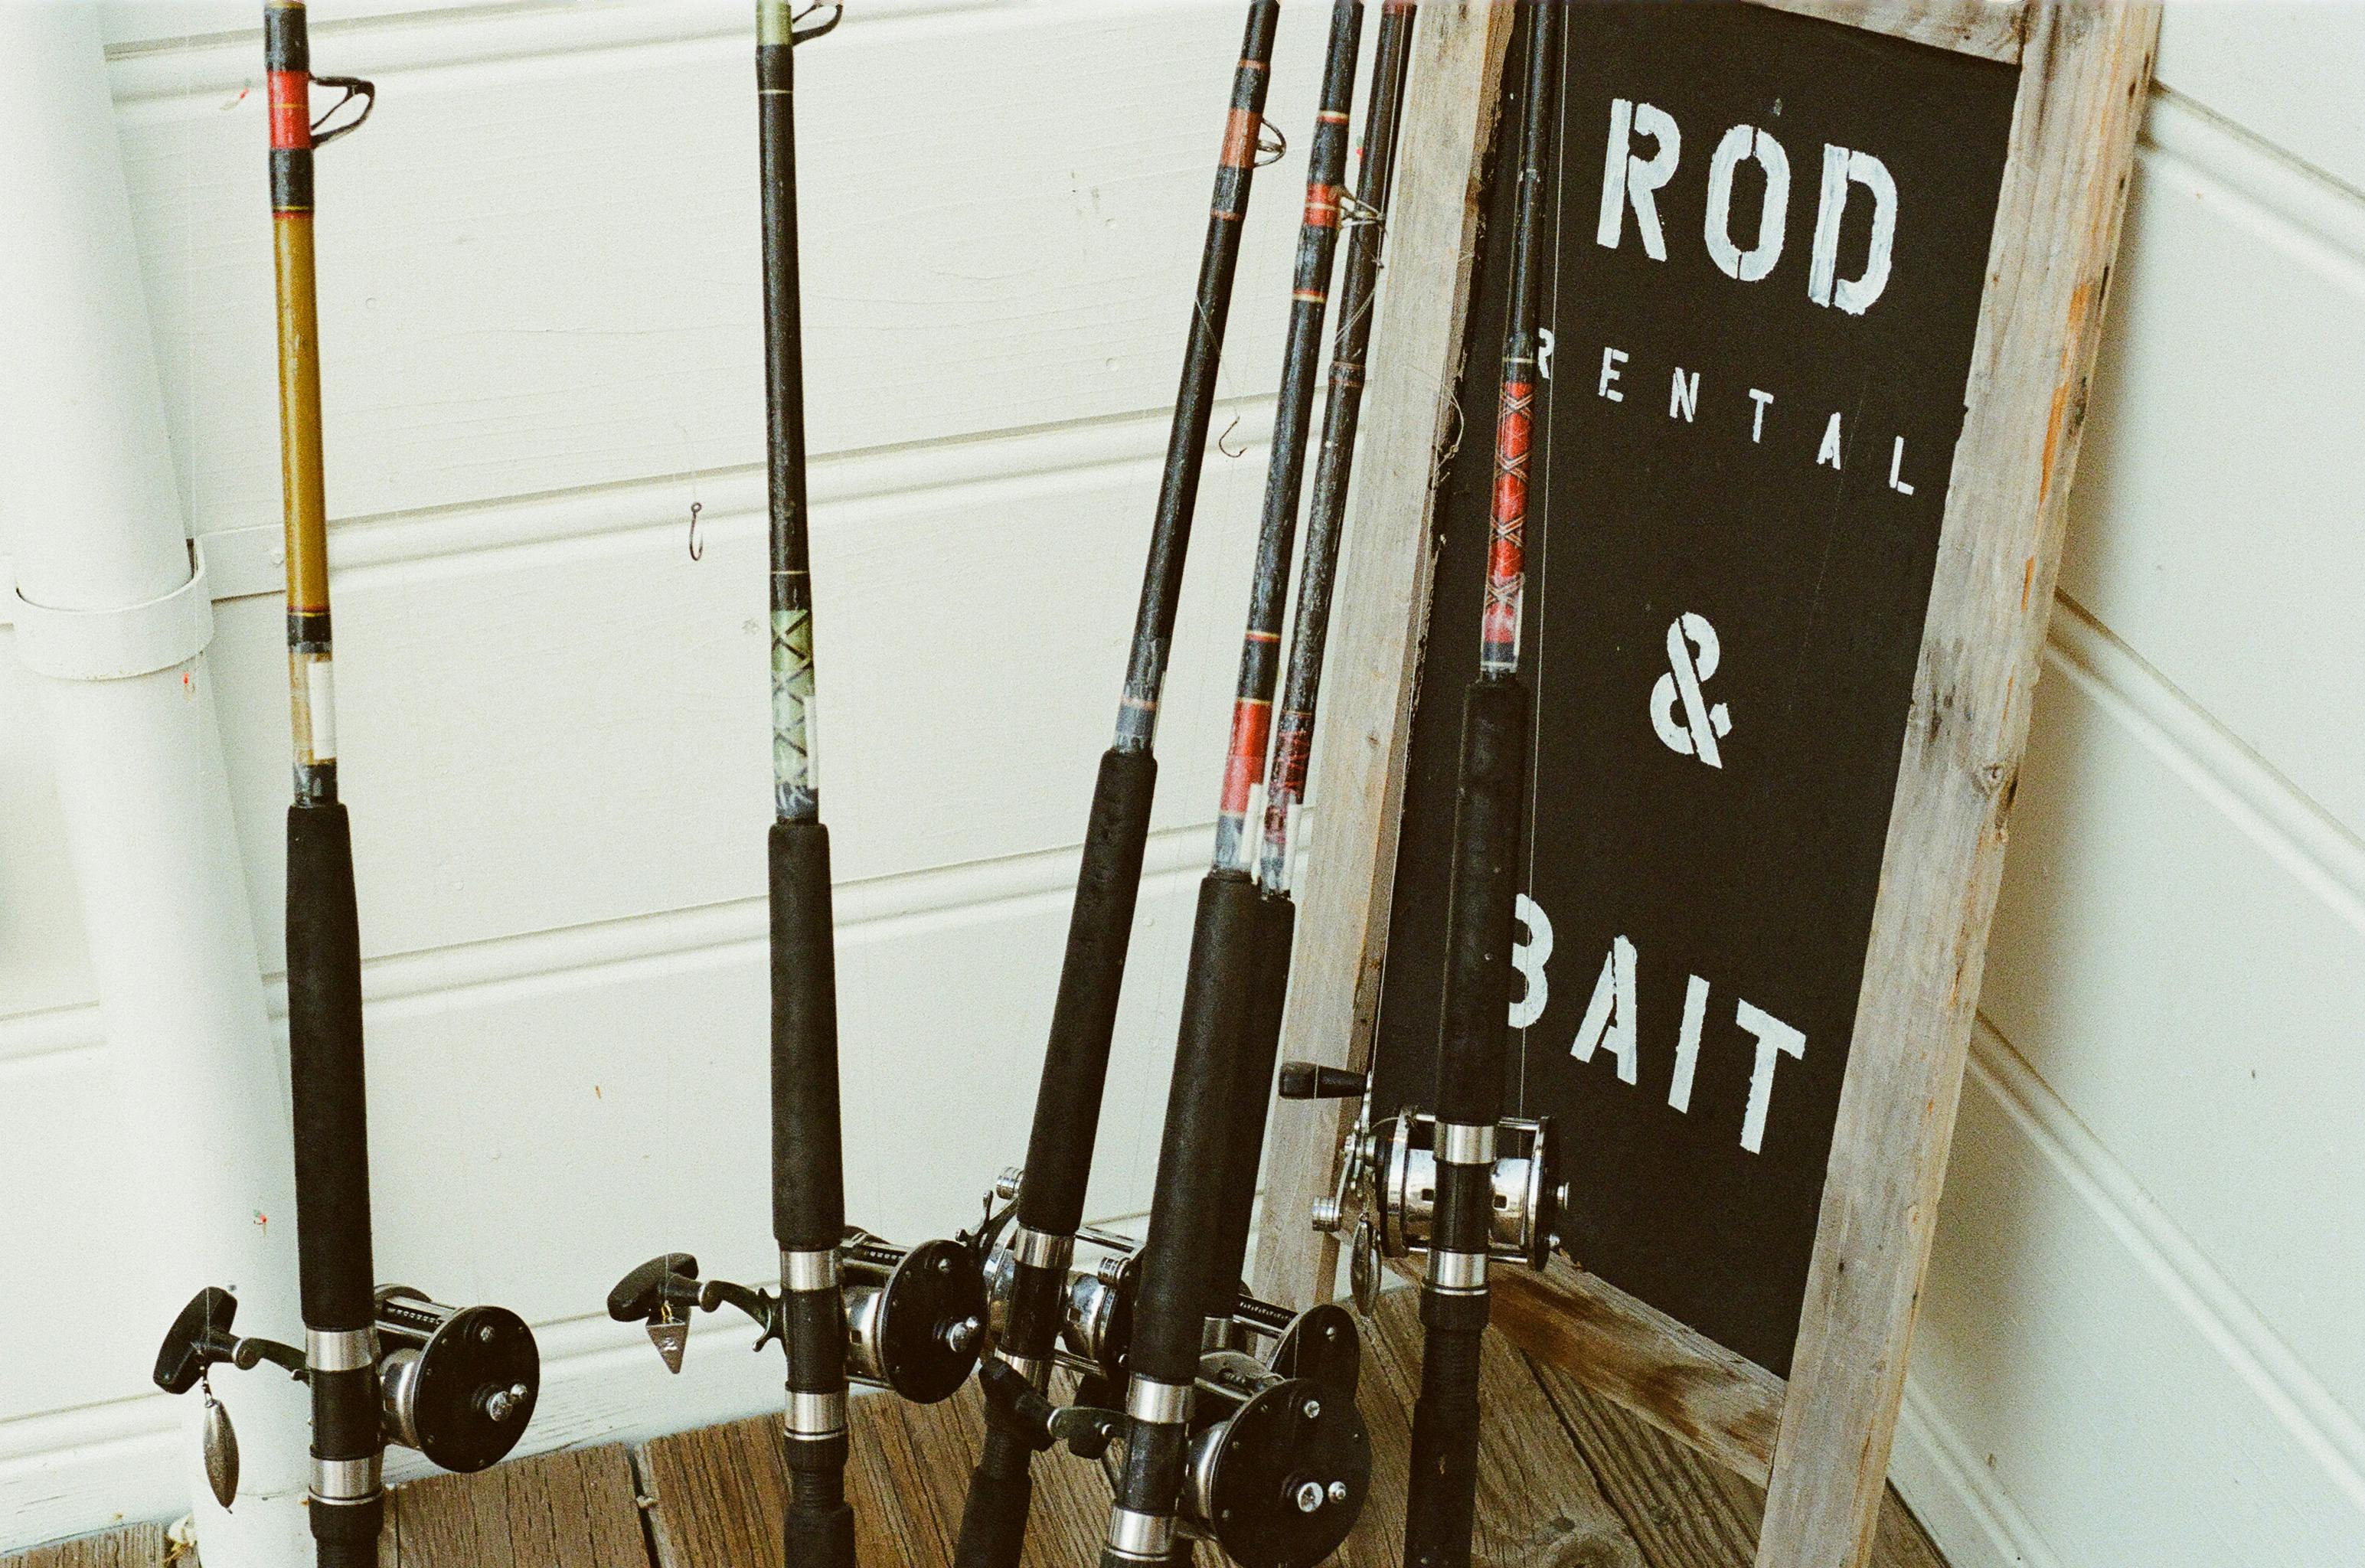 Six Assorted Fishing Rods Beside Rod Rental & Bait Signage · Free Stock  Photo